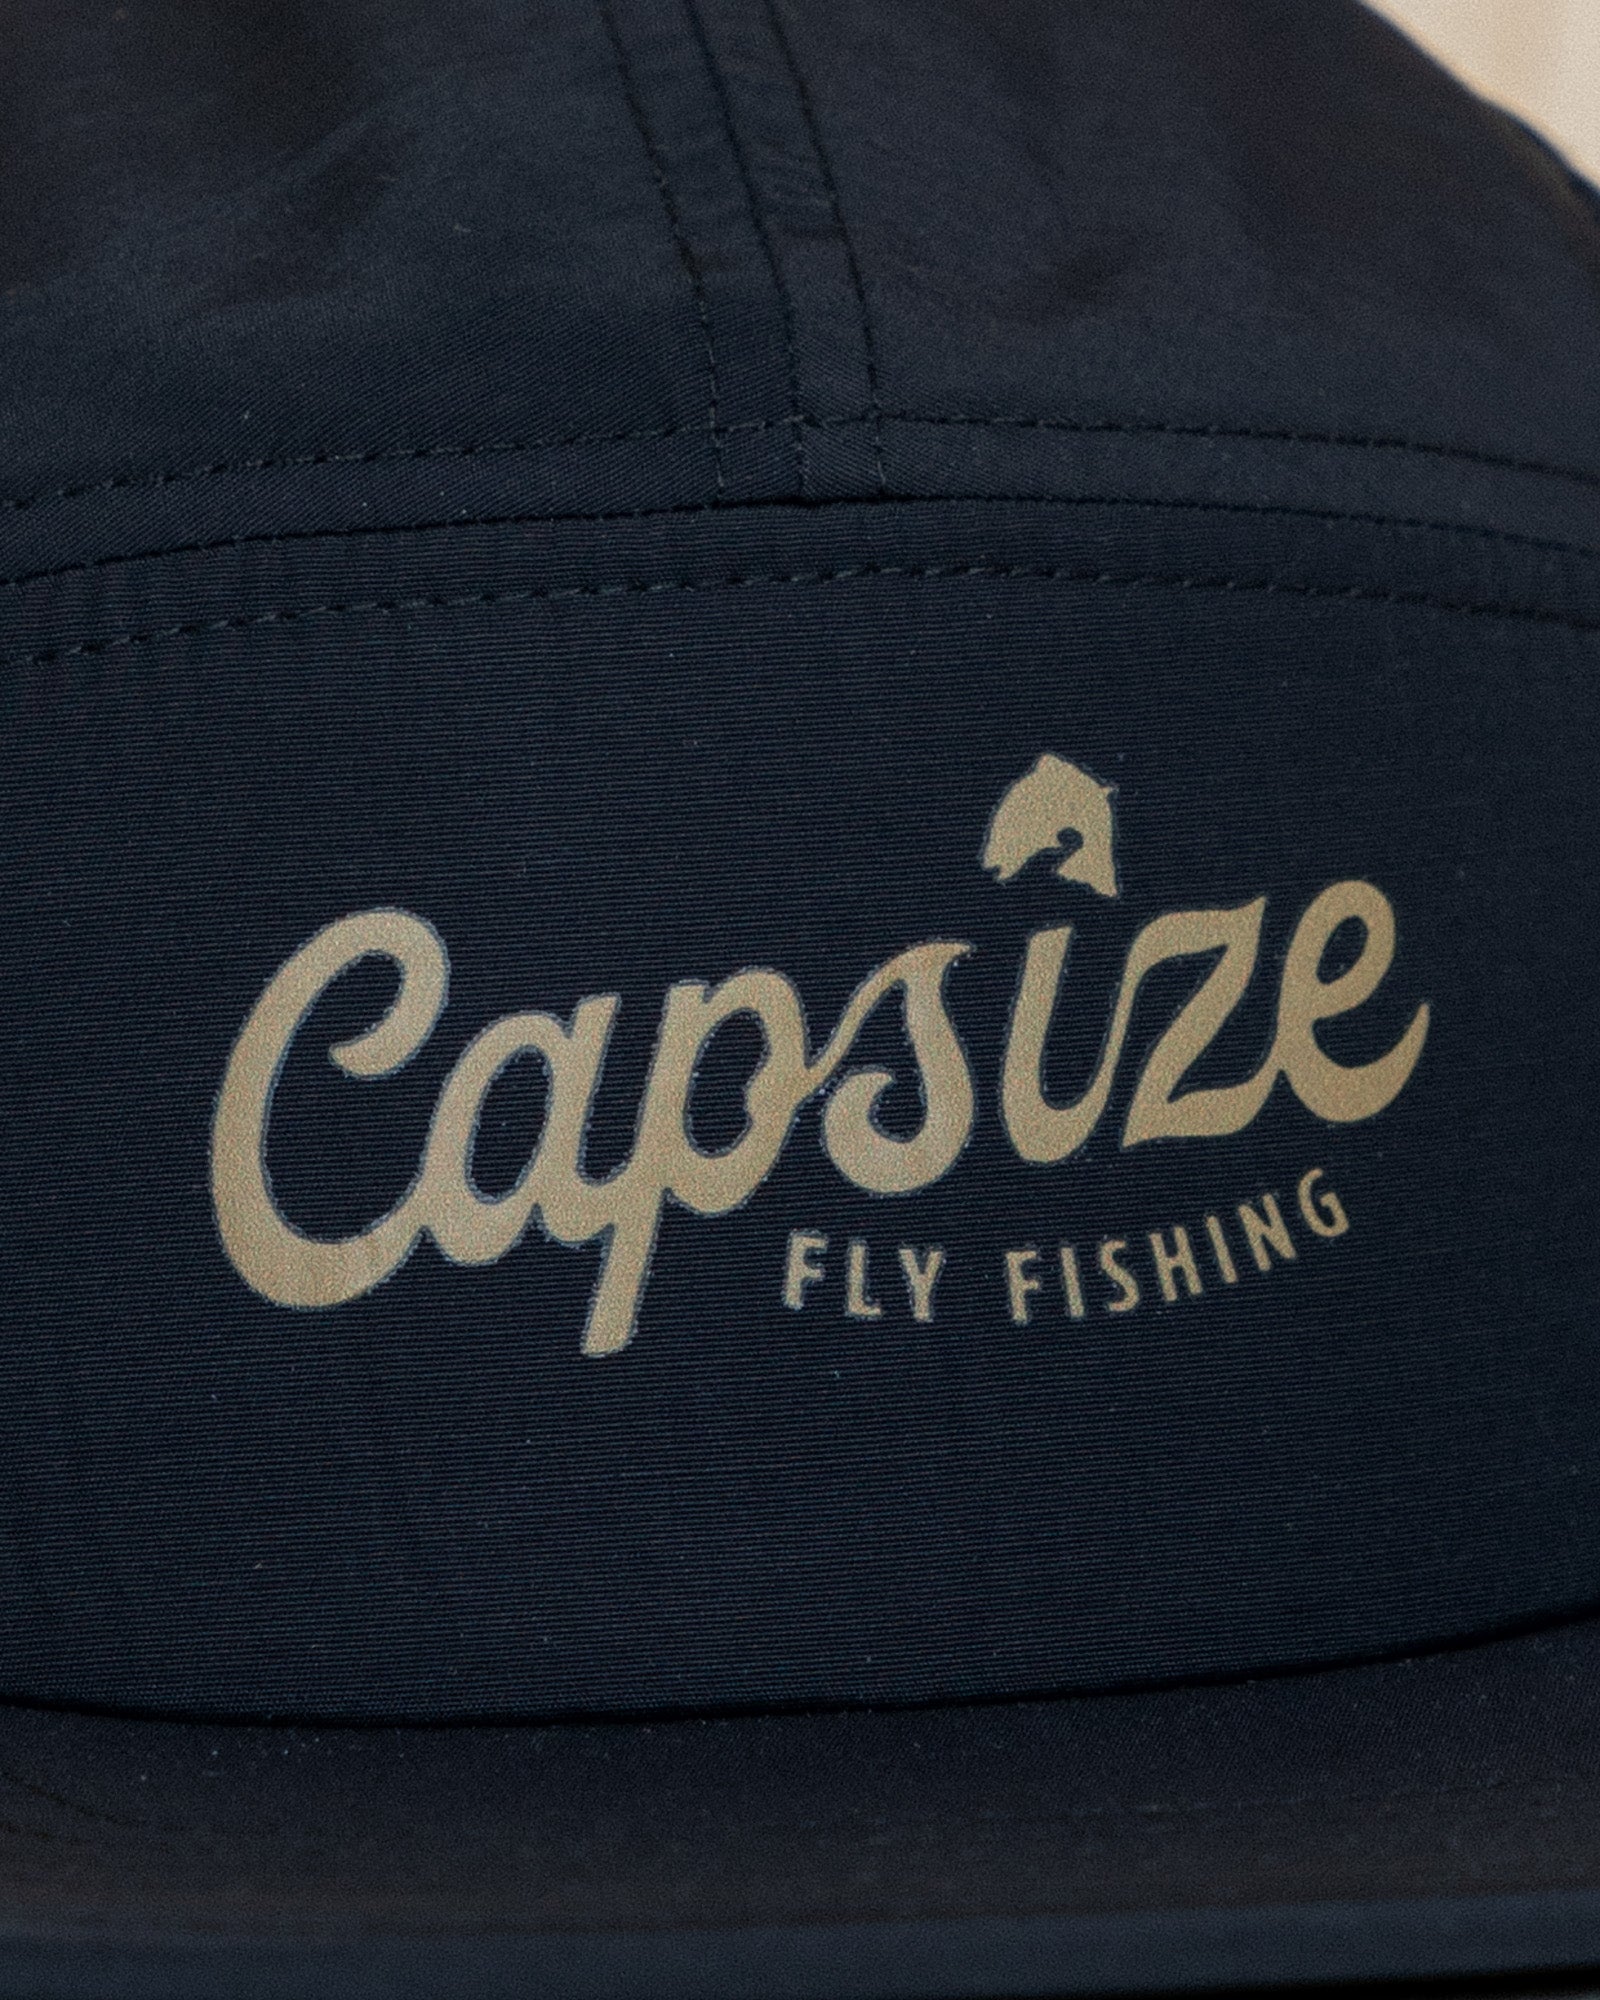 Fly Fishing Hat | Capsize Packable Black Camper Cap